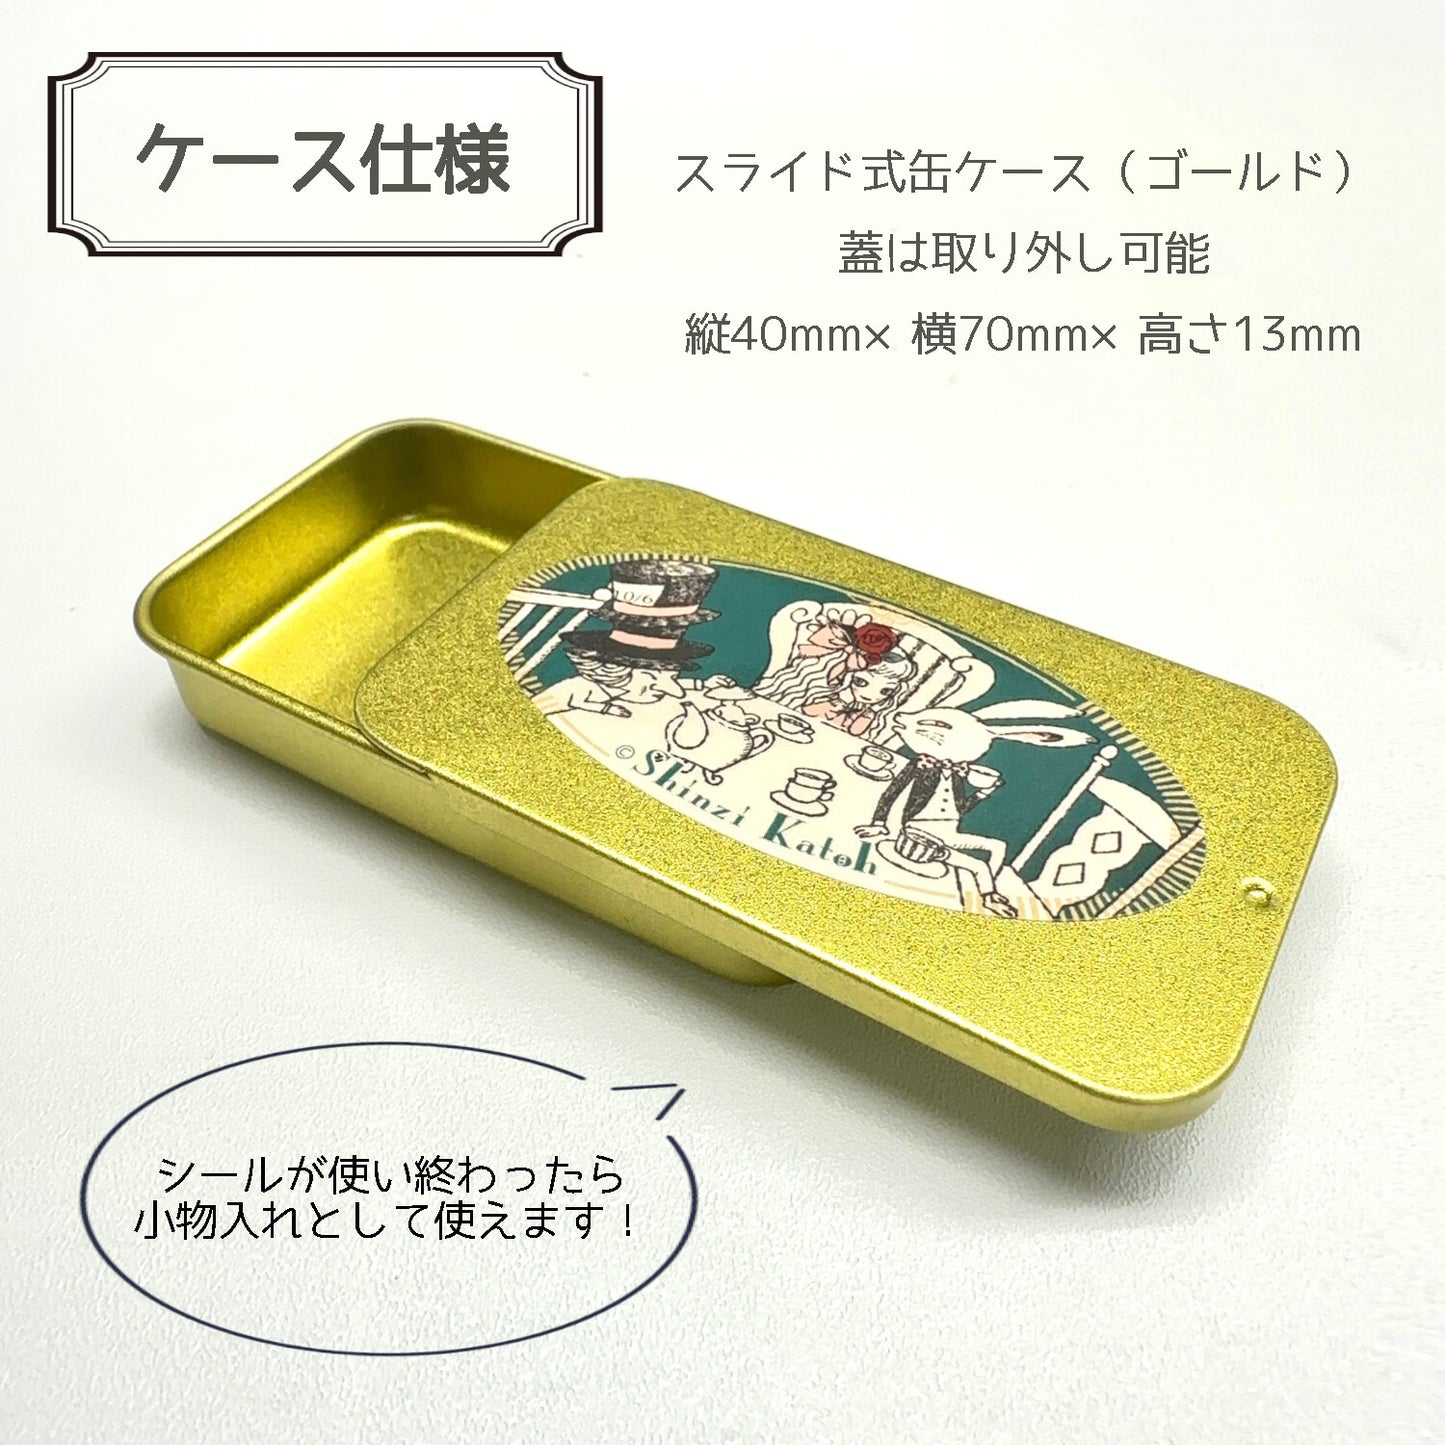 Alice in Wonderland Stickers Flakes in Tin Usagi Alice Shinzi Katoh Design